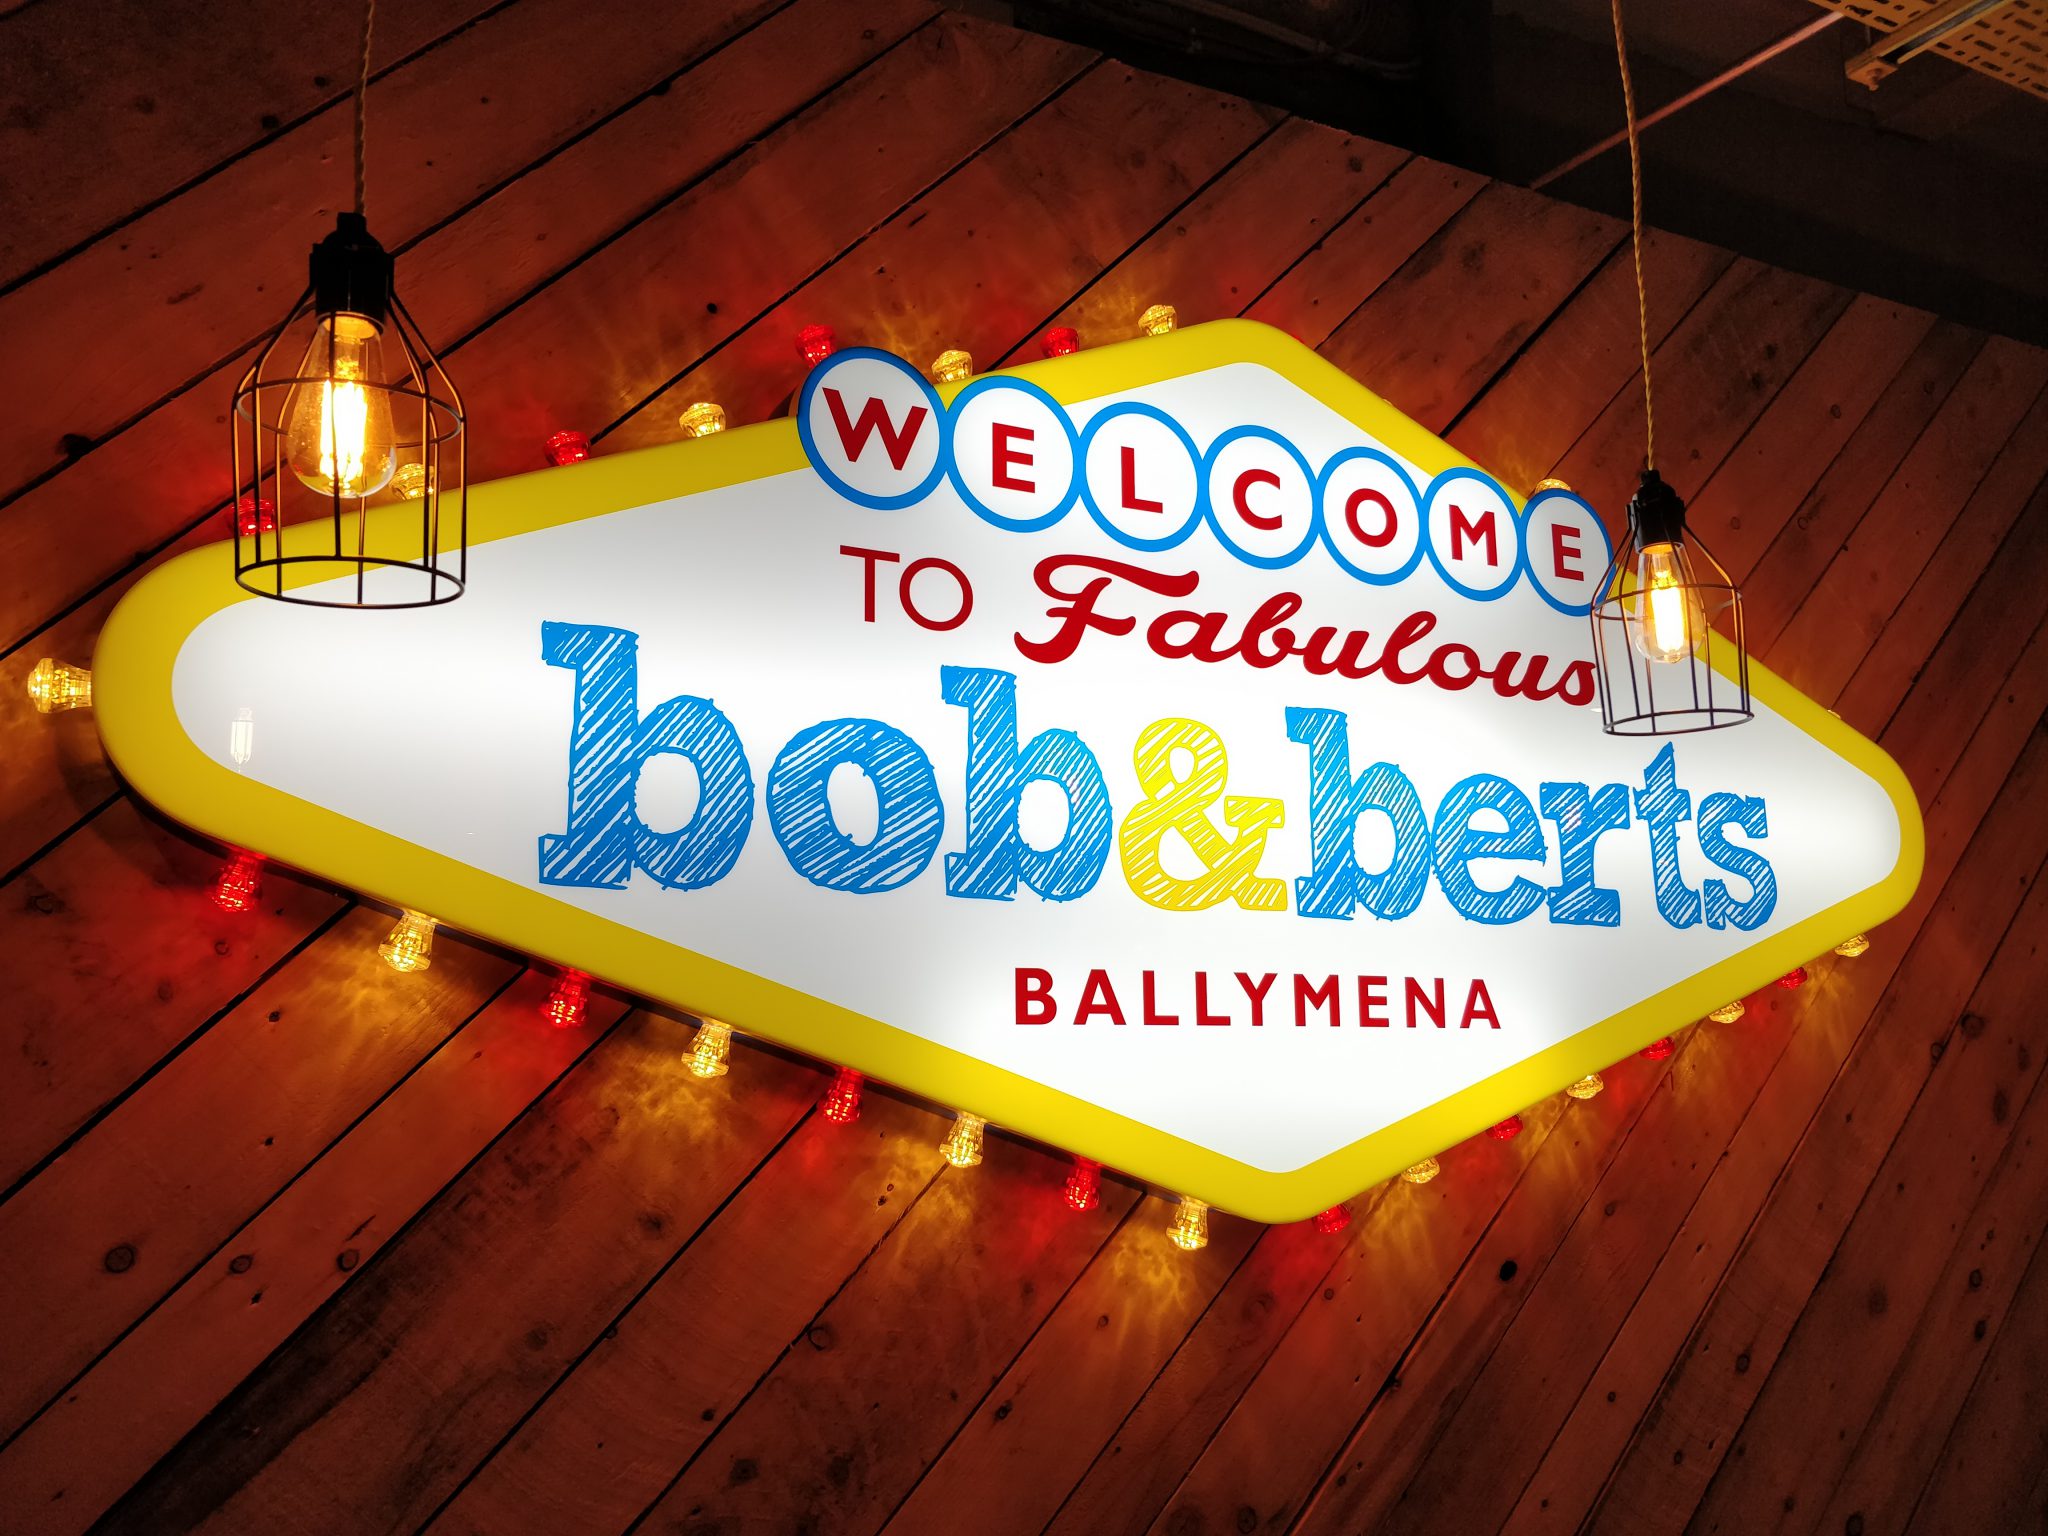 Bob & Berts Ballymena opens on Ballymoney Street